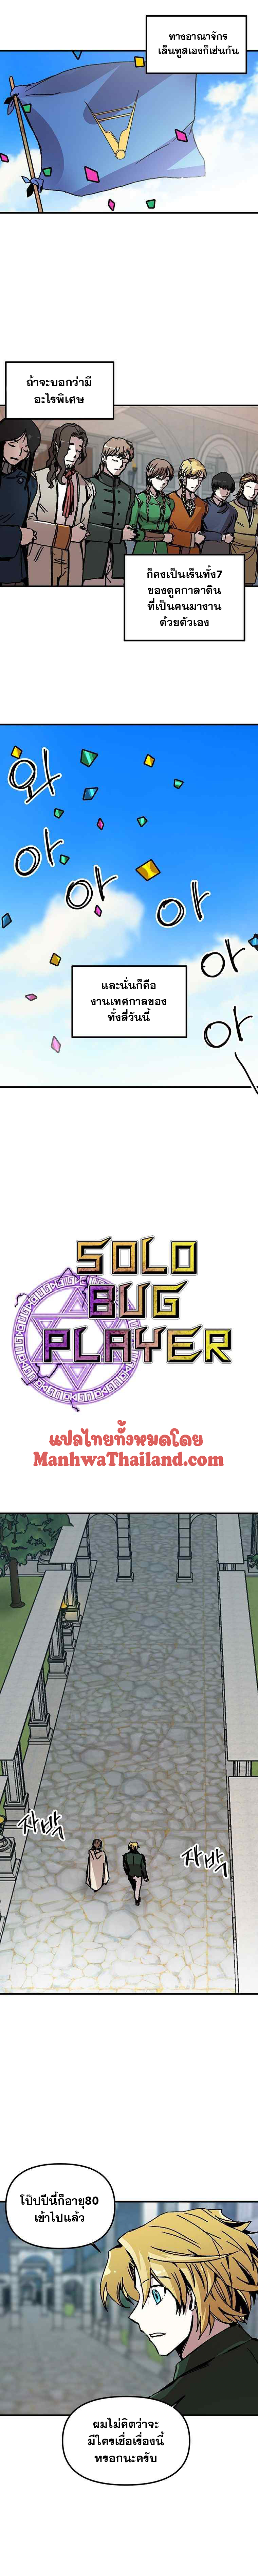 Solo bug player 94 (2)